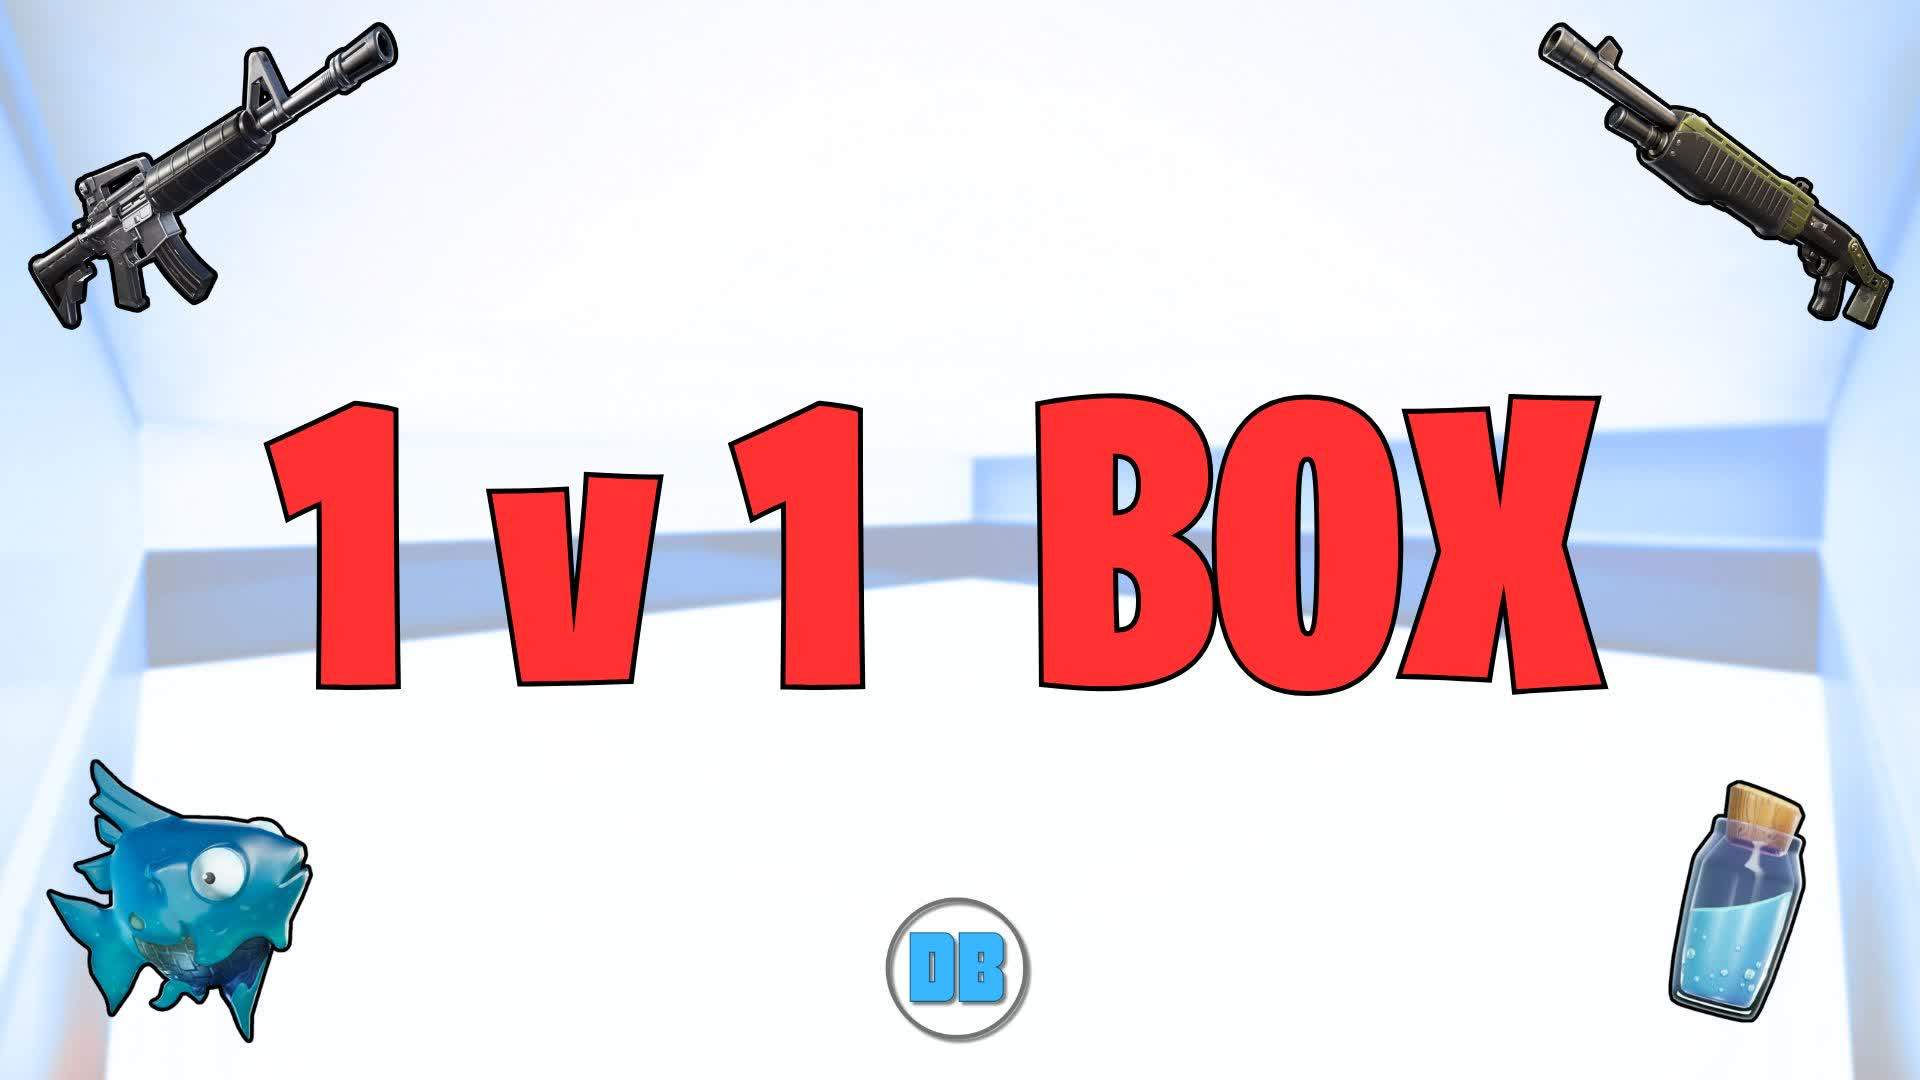 BOX FIGHT 1v1